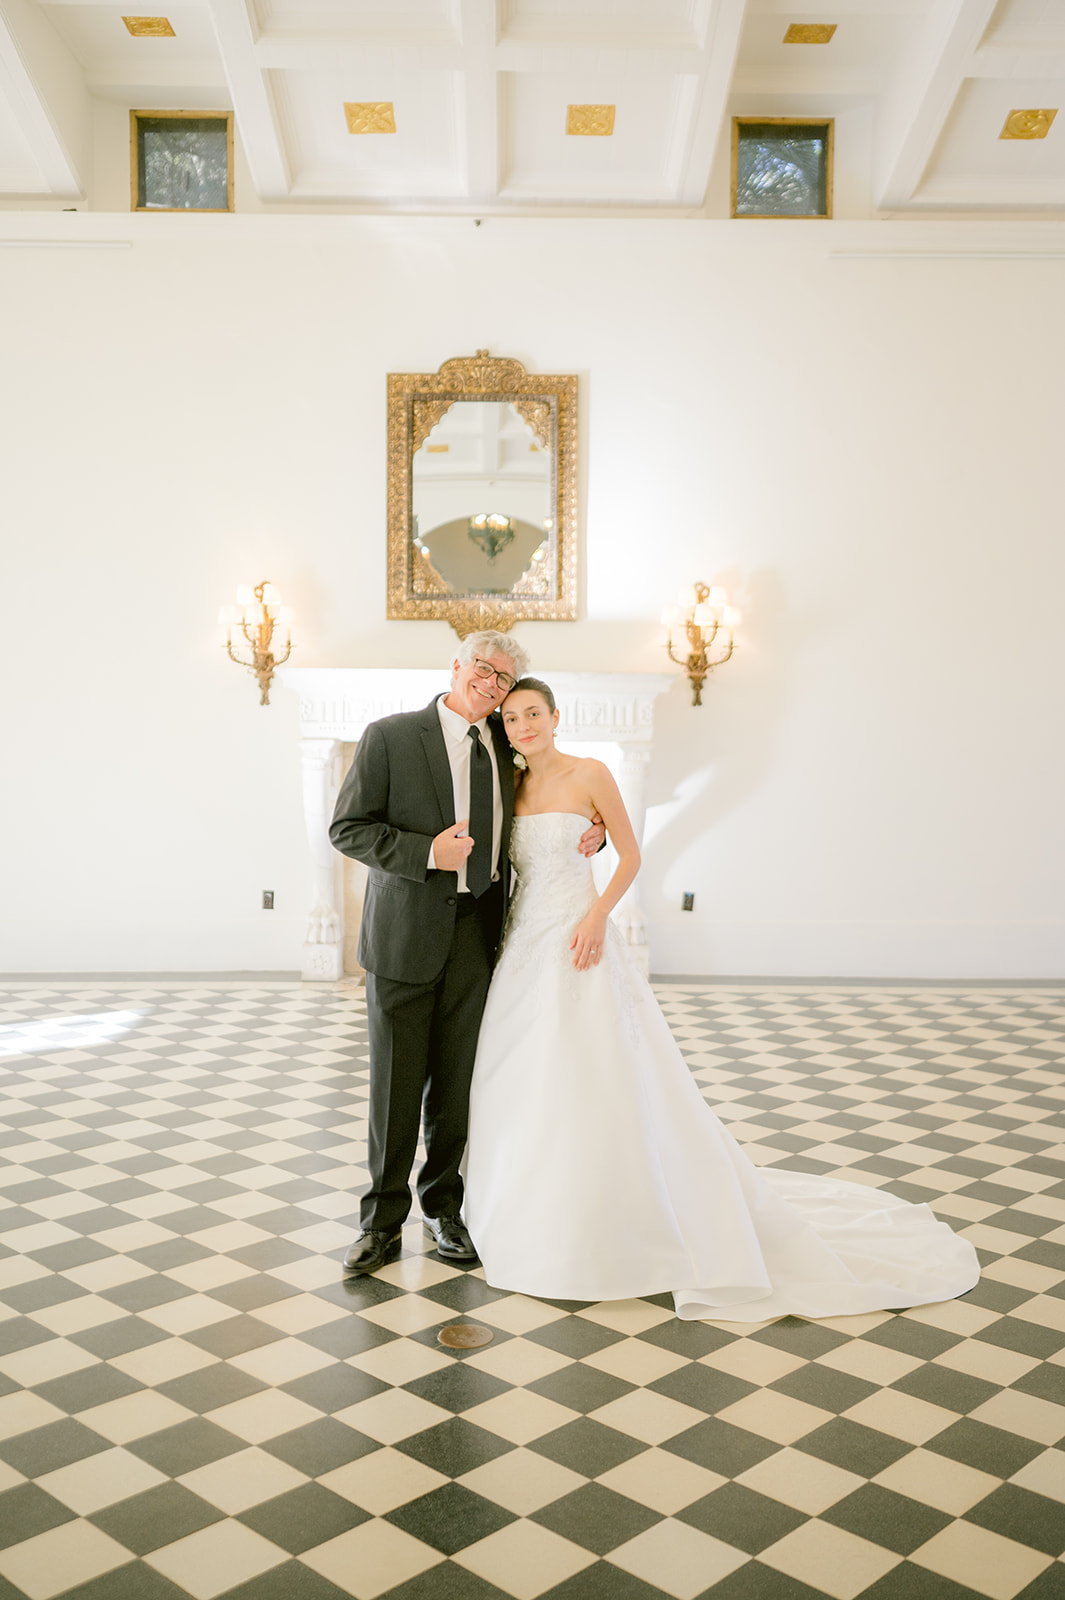 Miami Florida wedding photographer with a unique perspective
